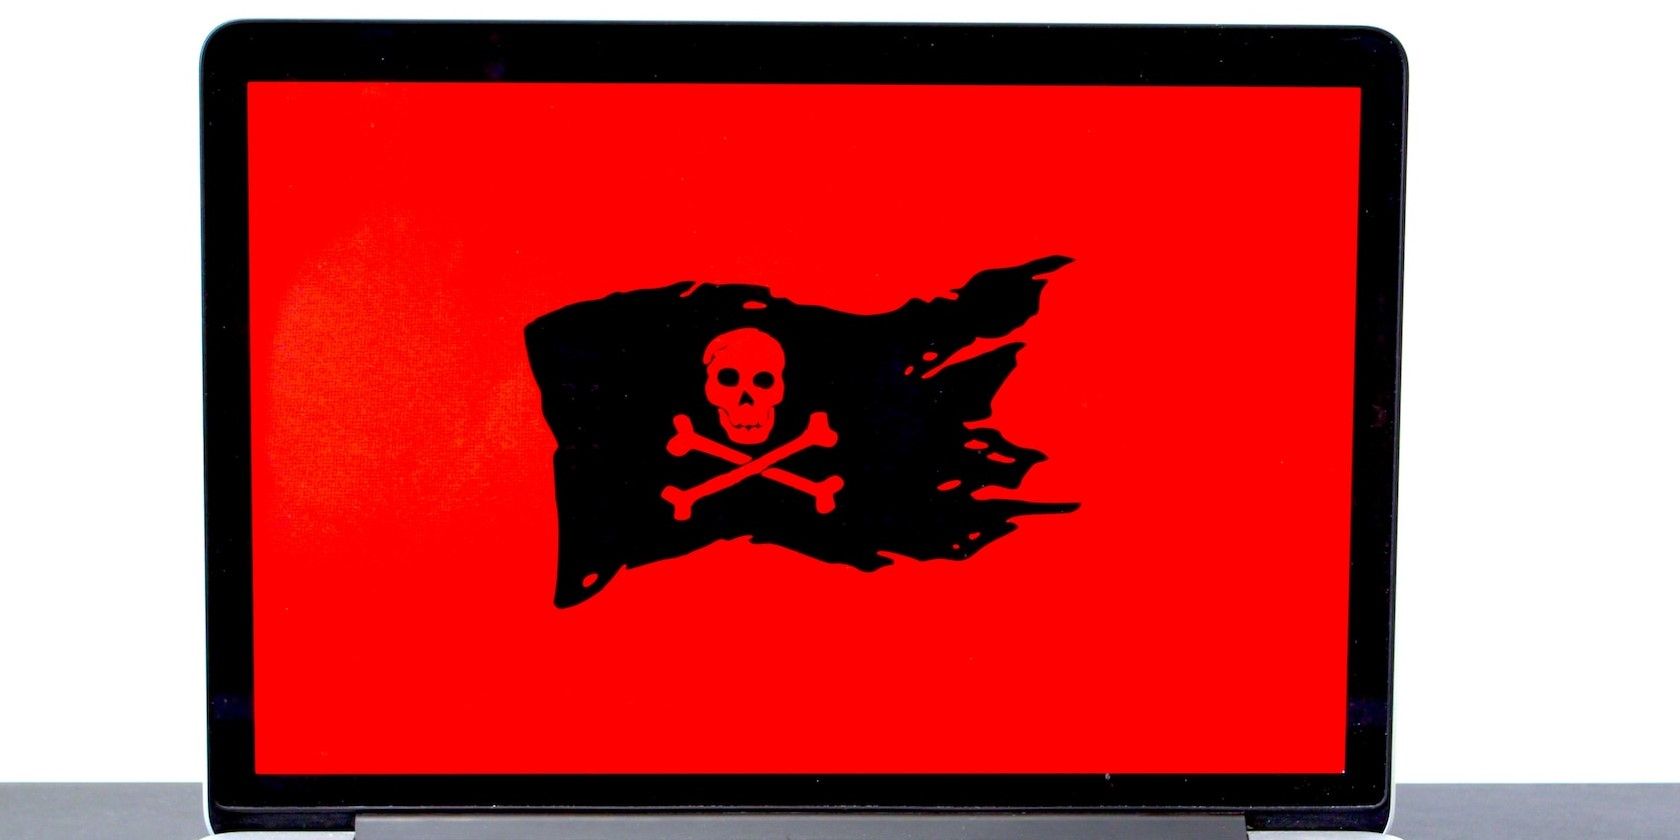 Laptop screen displaying a pirate flag